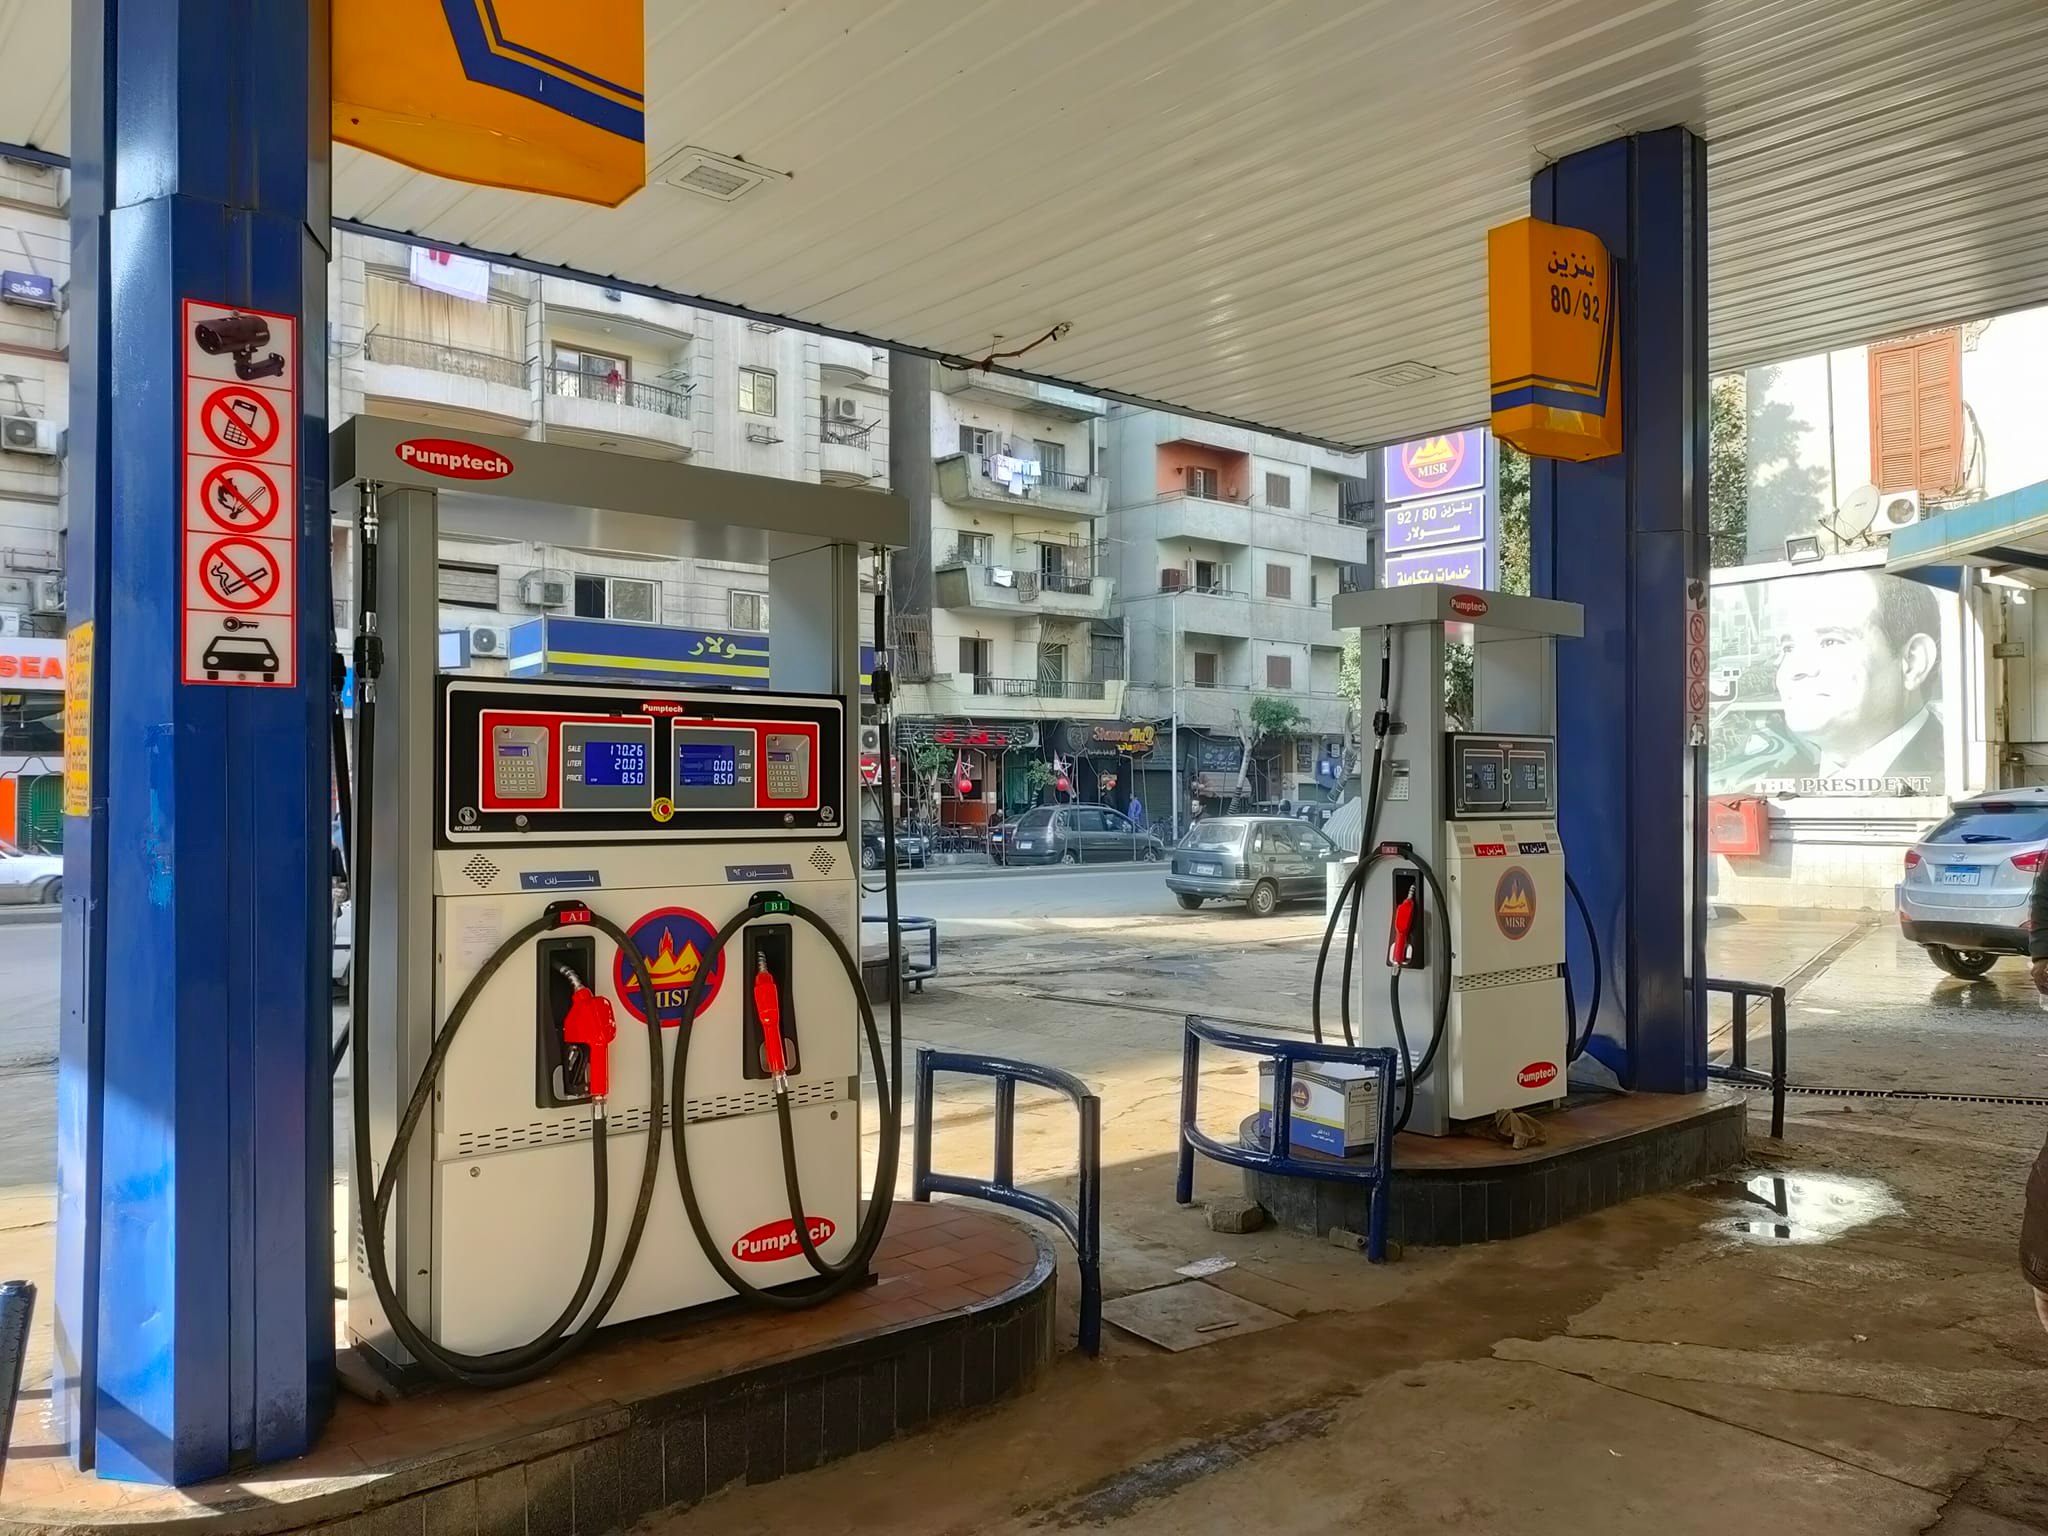 Misr Petroleum Gaz Station